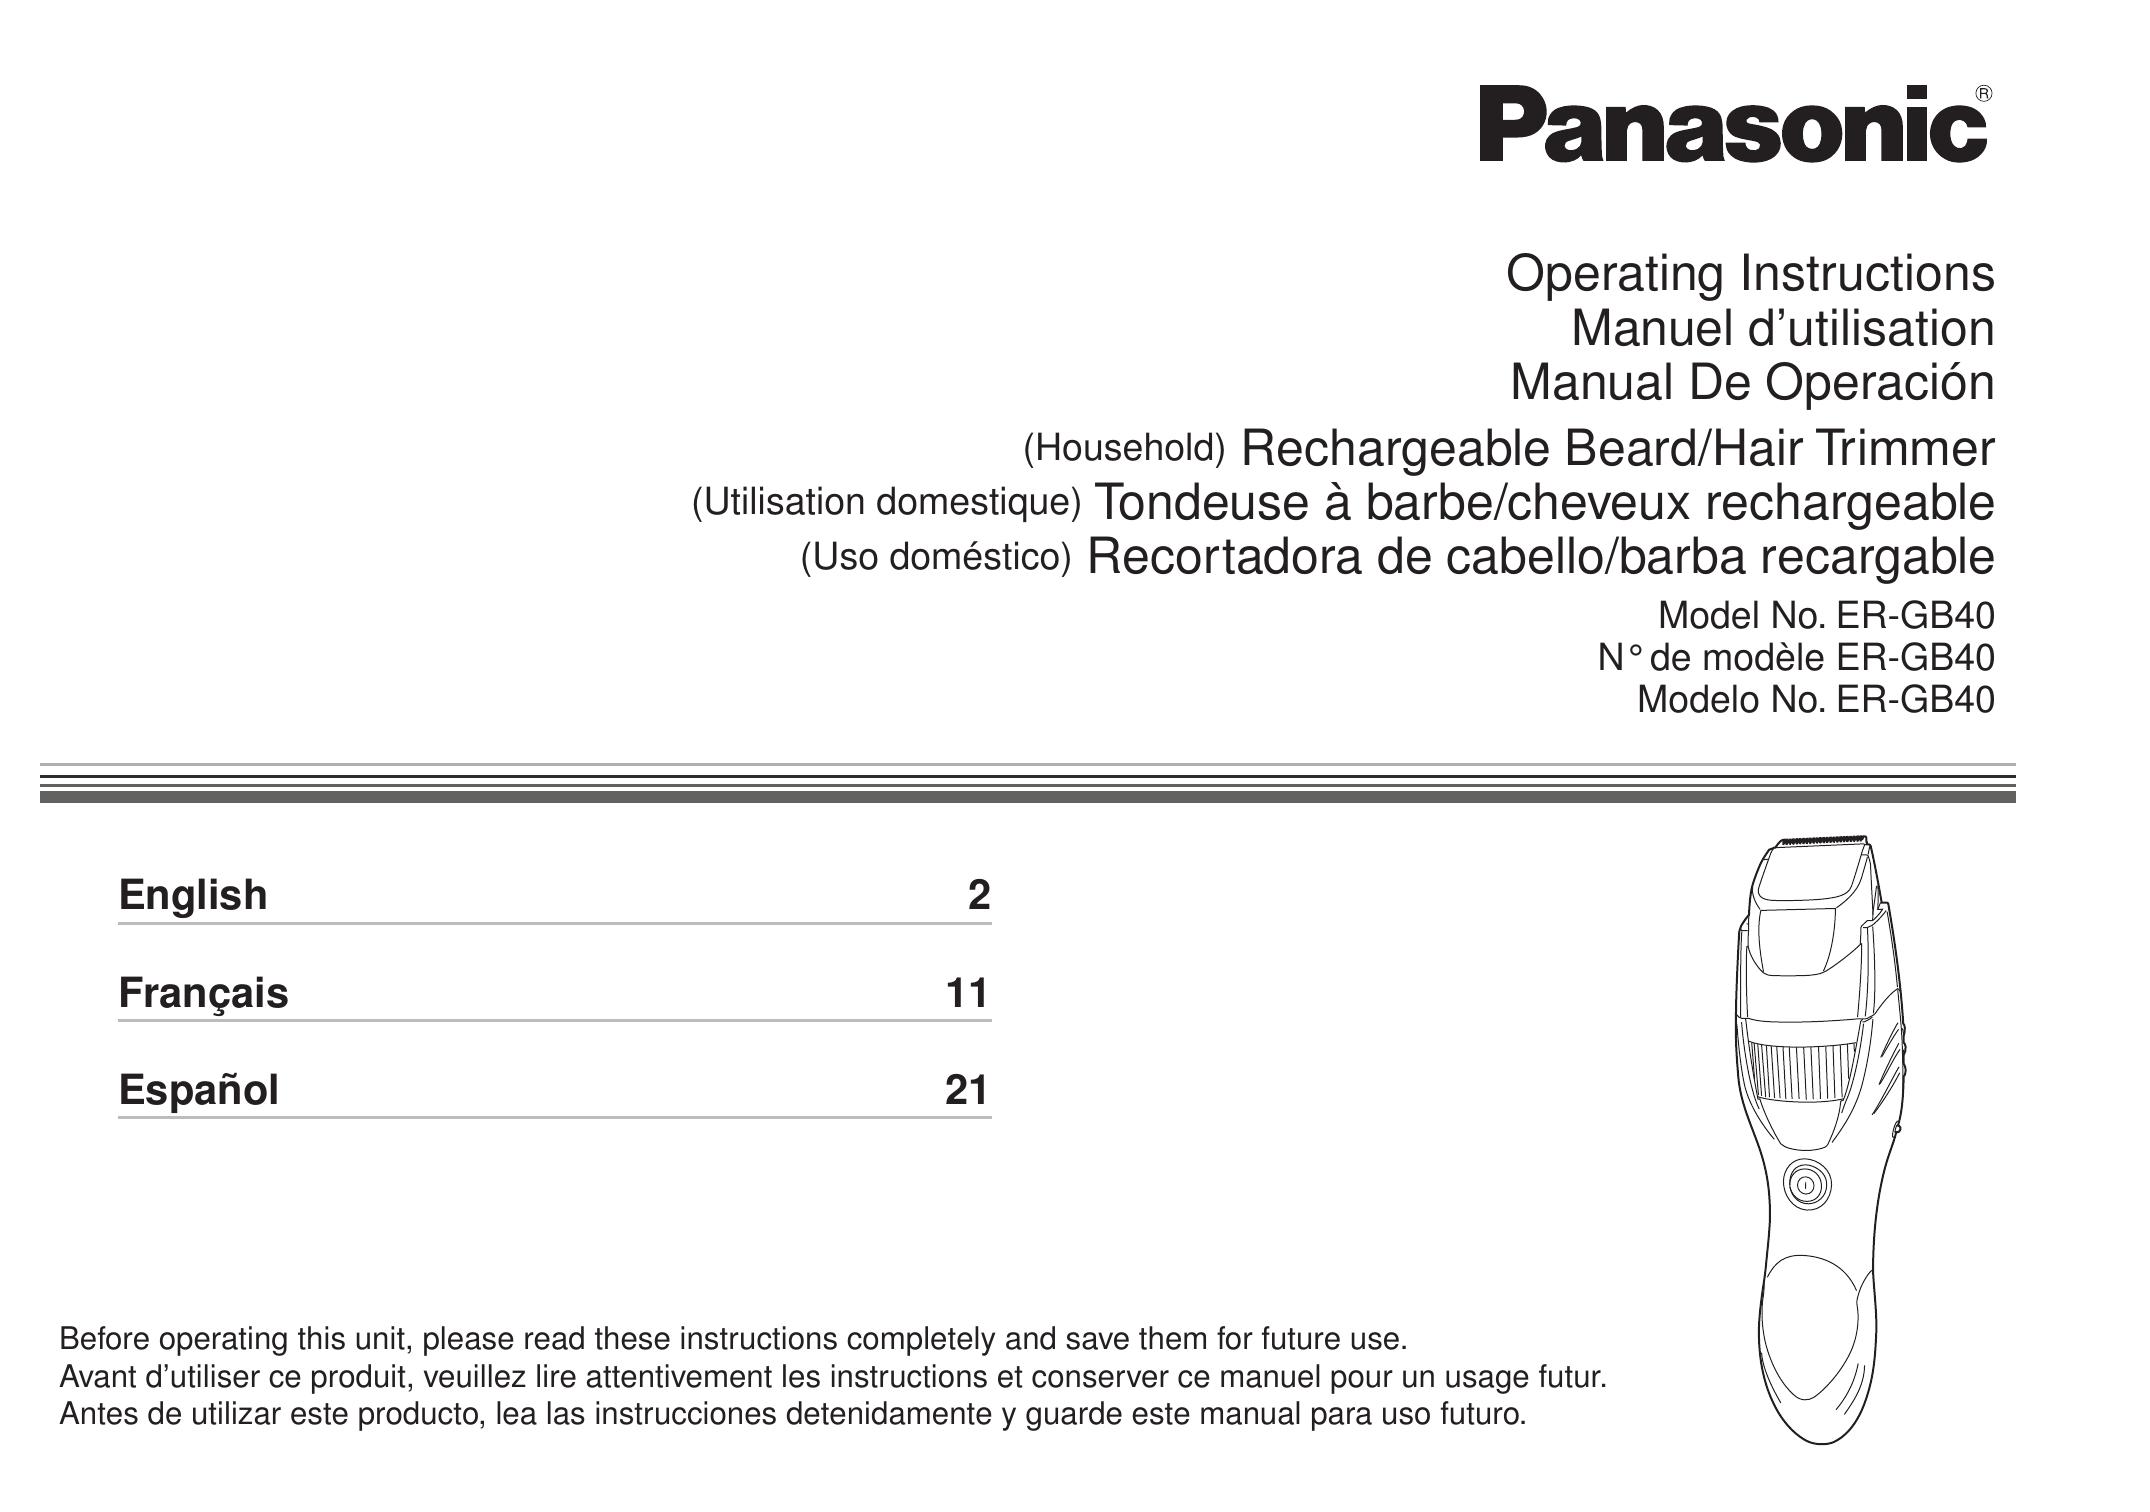 Panasonic ERGB40 Electric Shaver User Manual